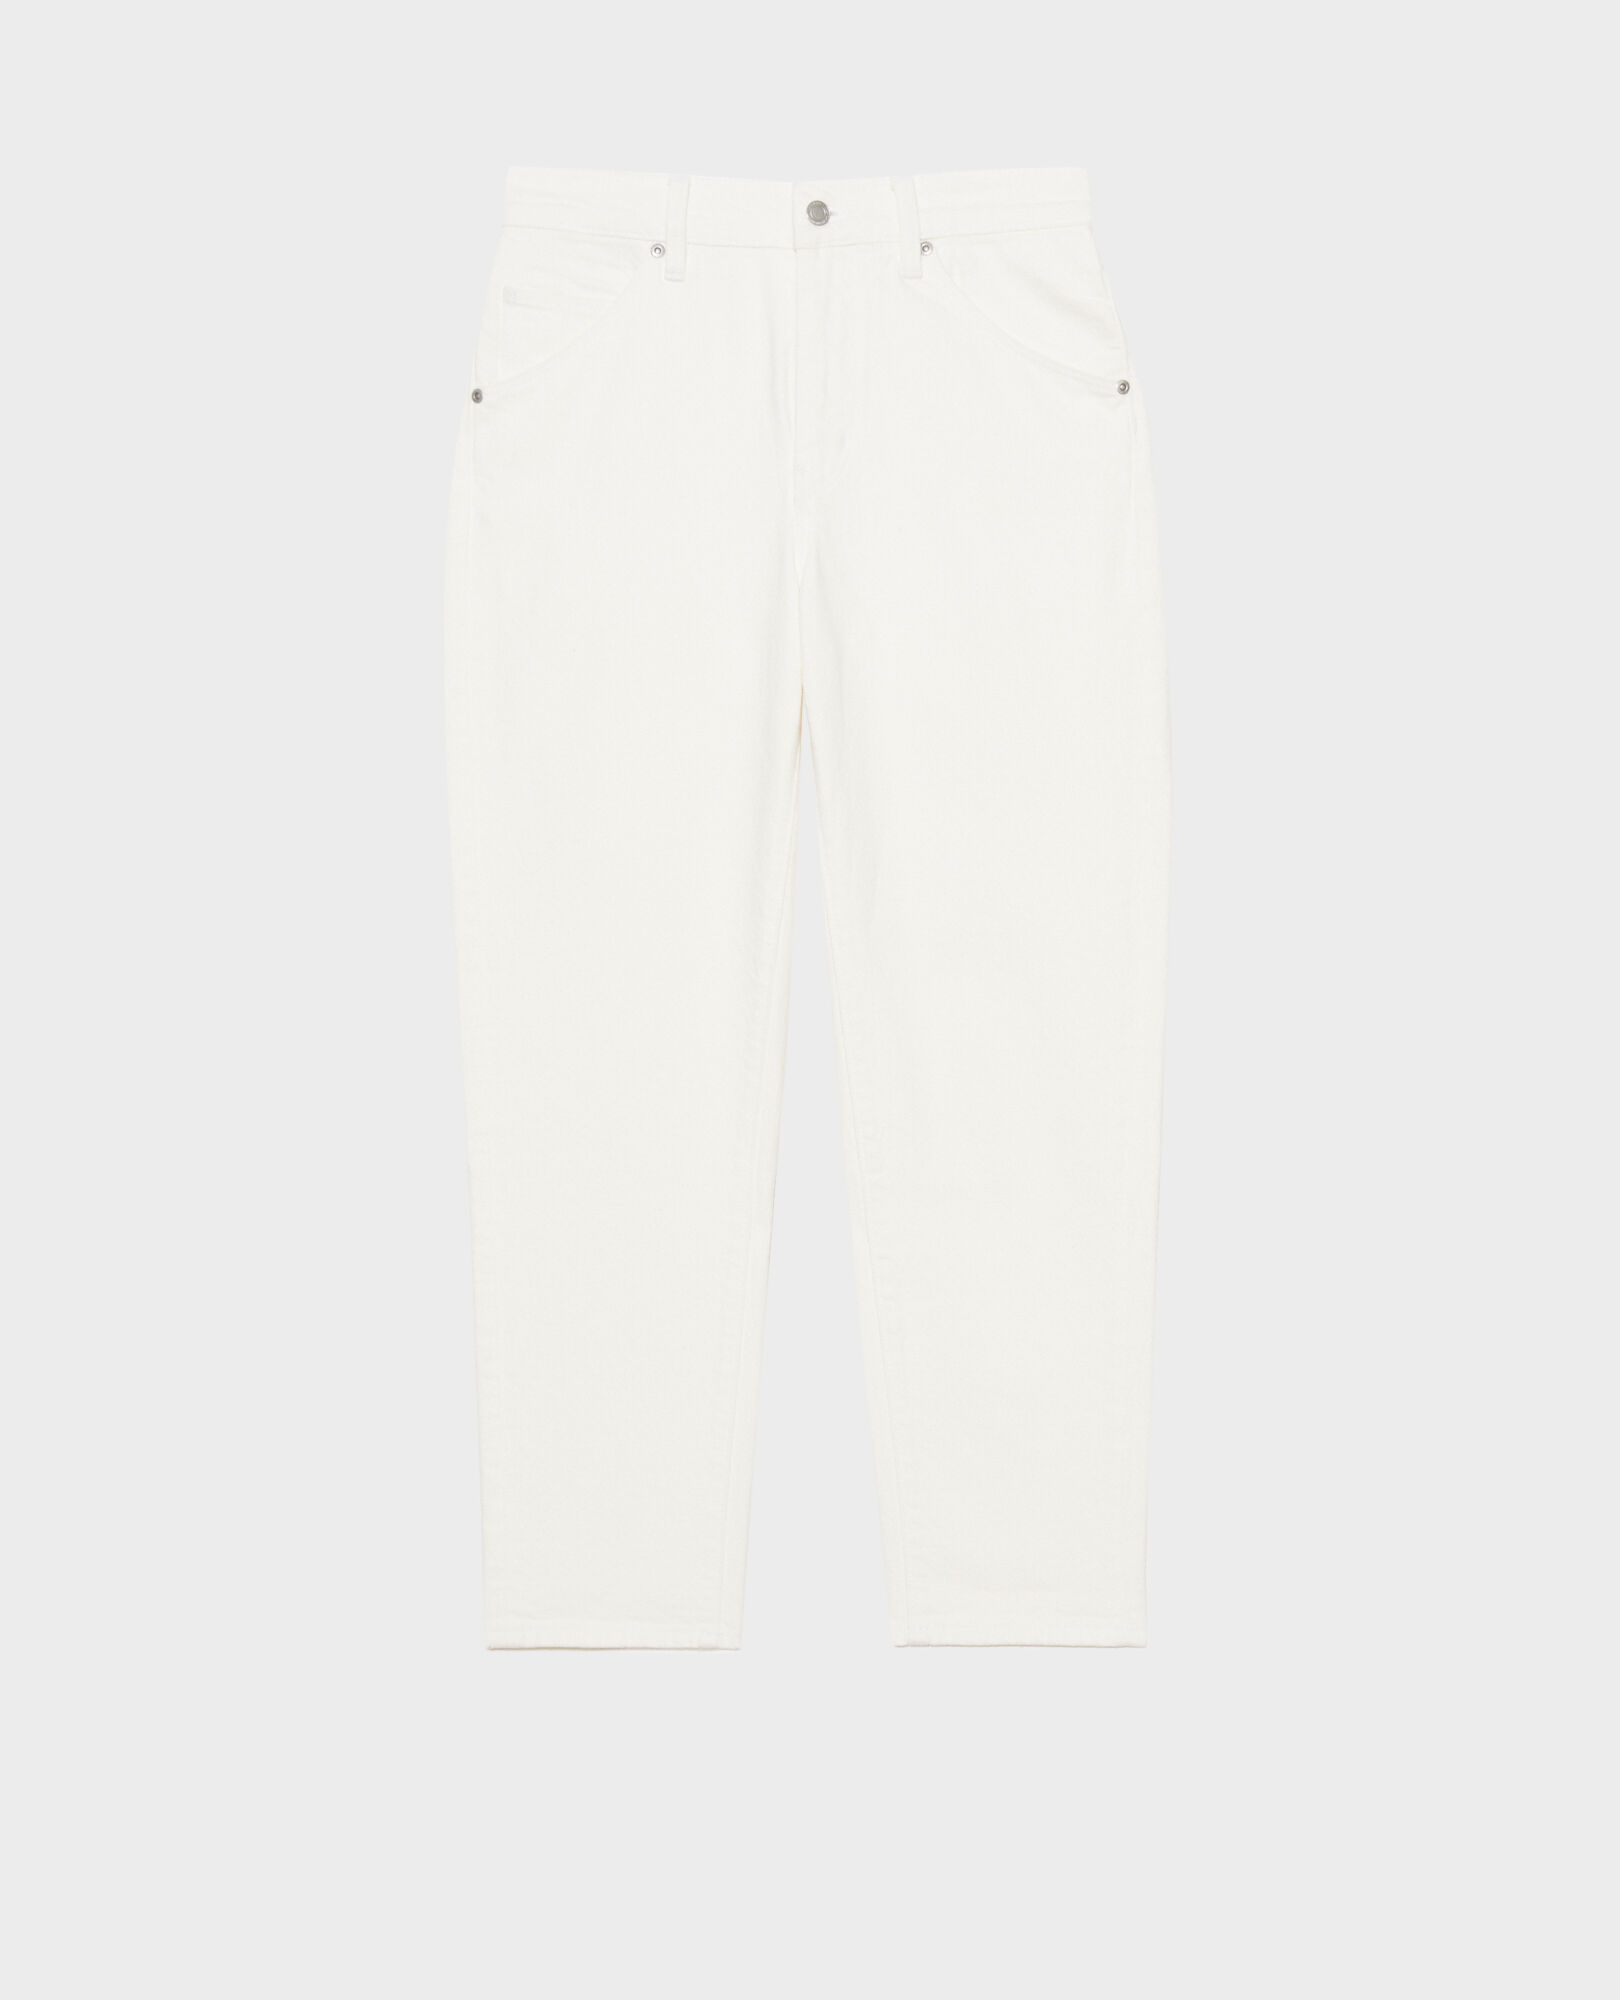 RITA - SLOUCHY - Loose cotton jeans 108 denim white 2spe330c62